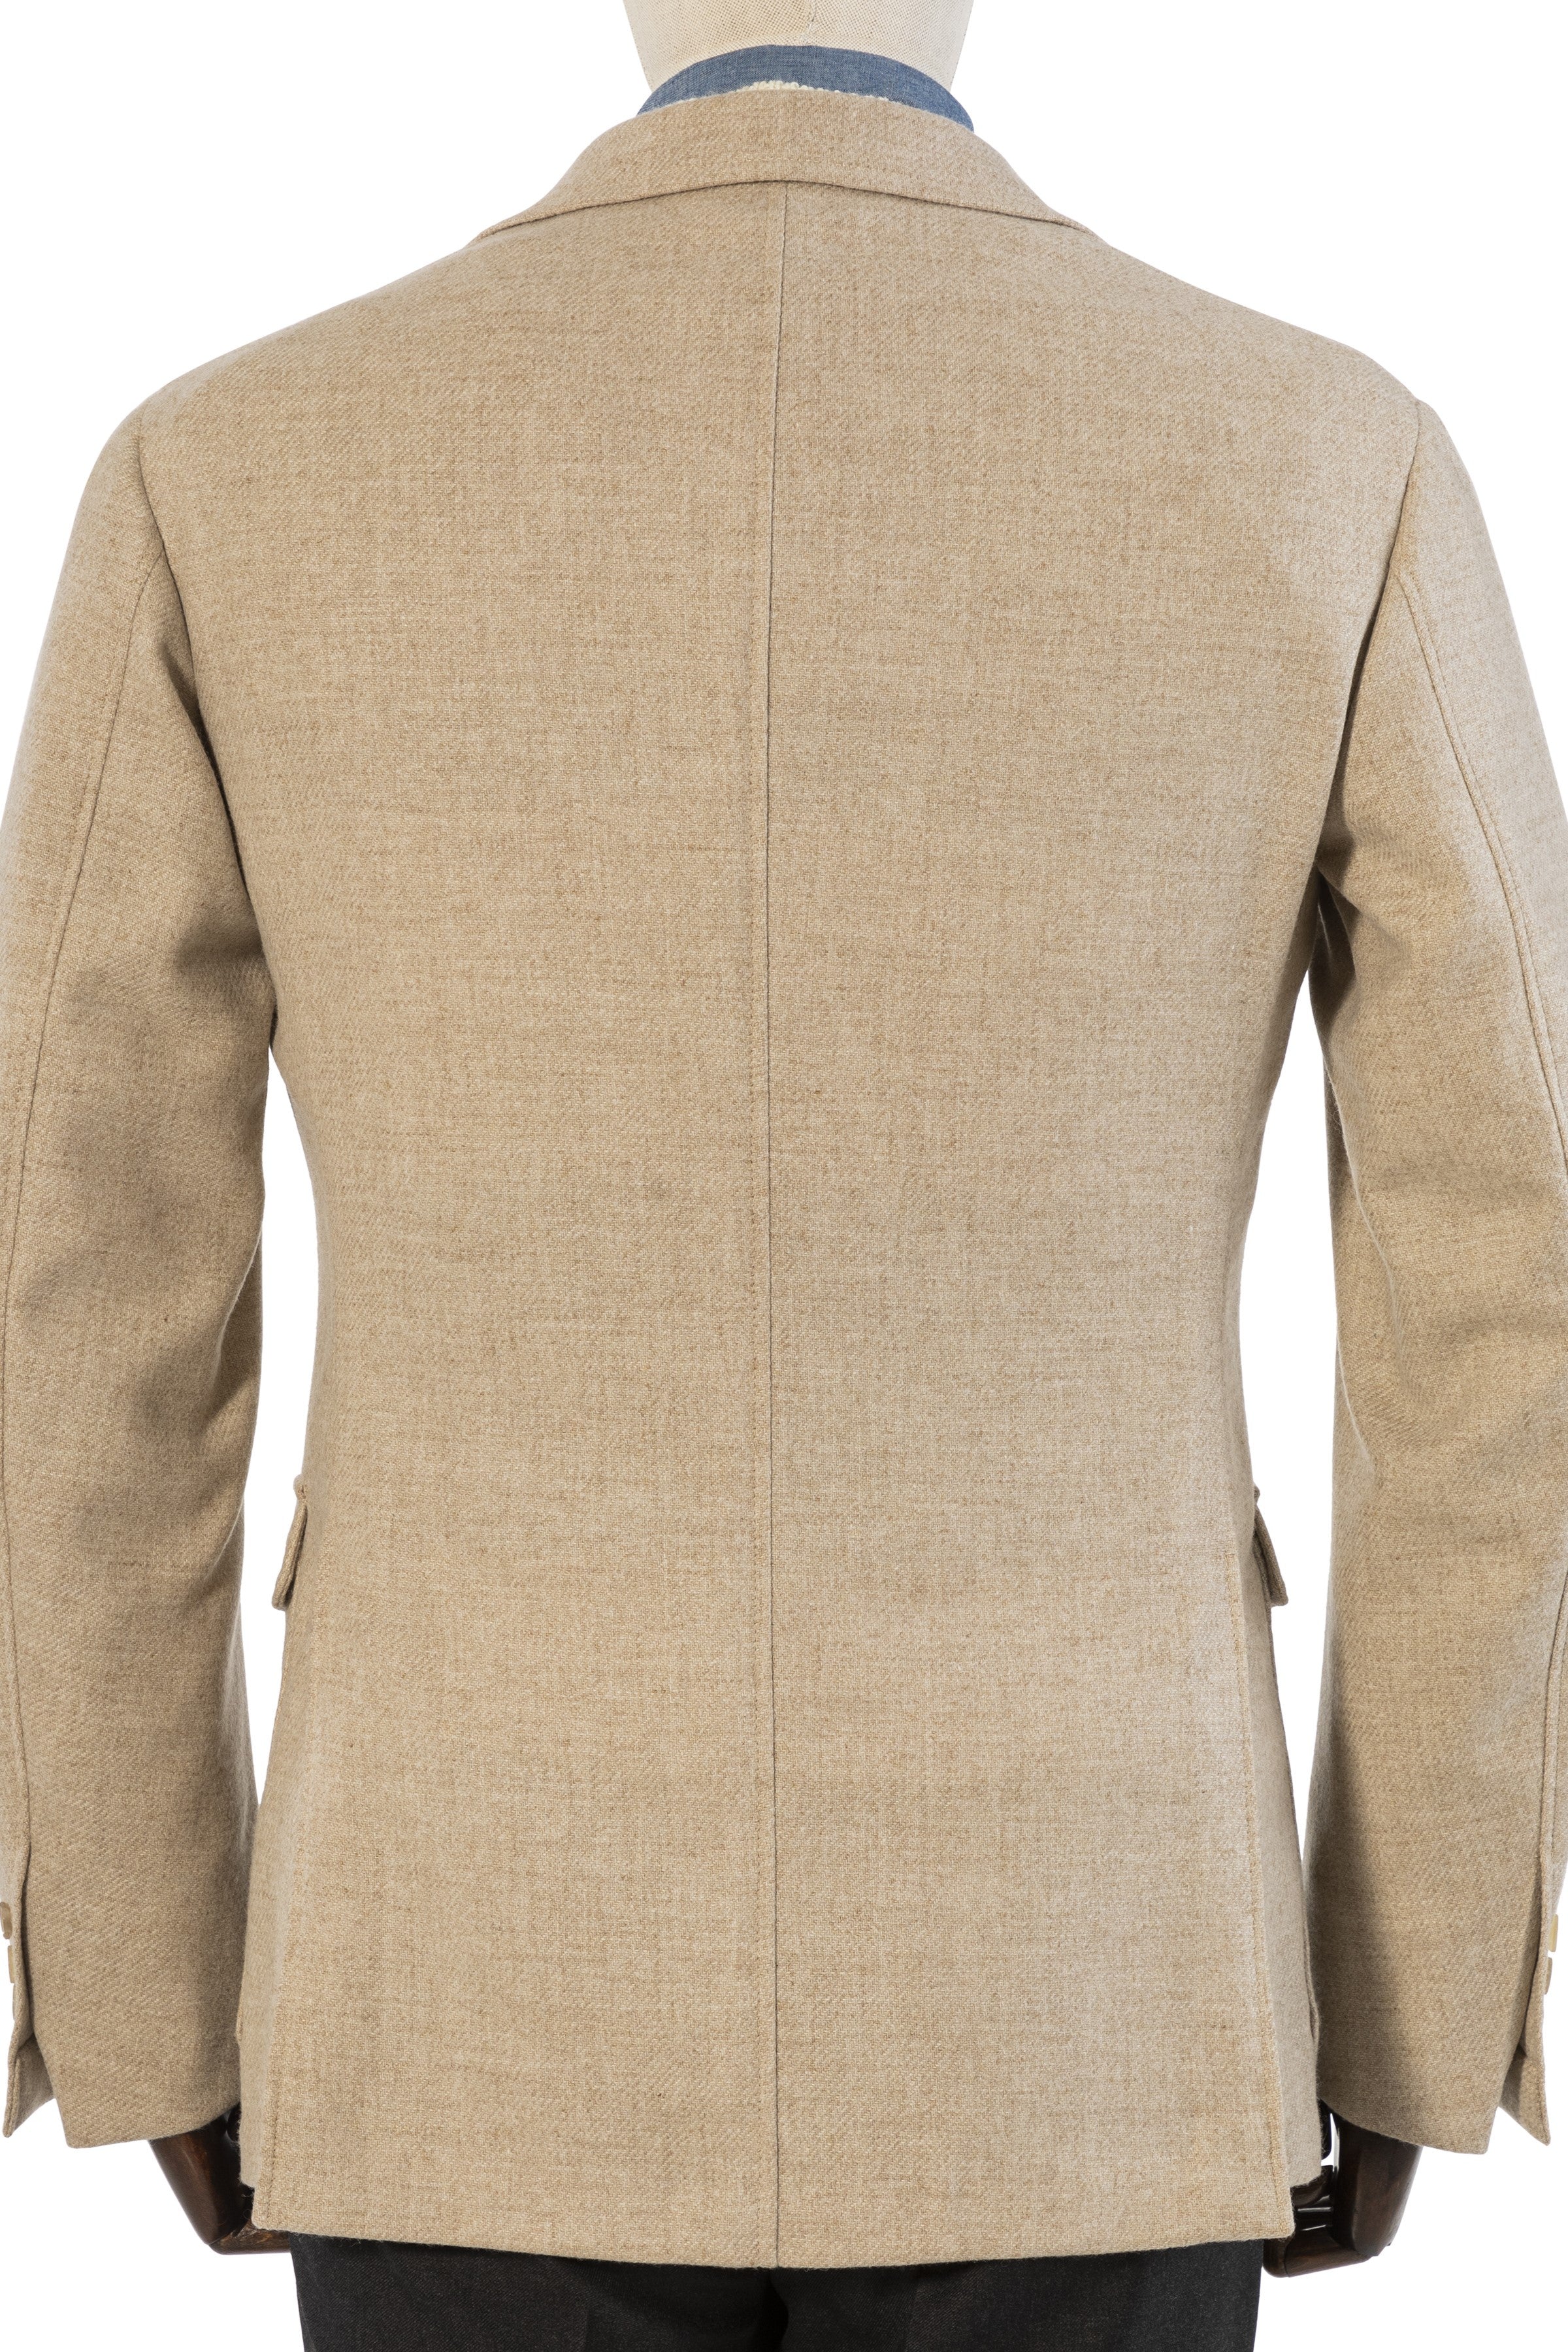 The Armoury by Ring Jacket Model 11 Beige Moon Wool Sport Coat